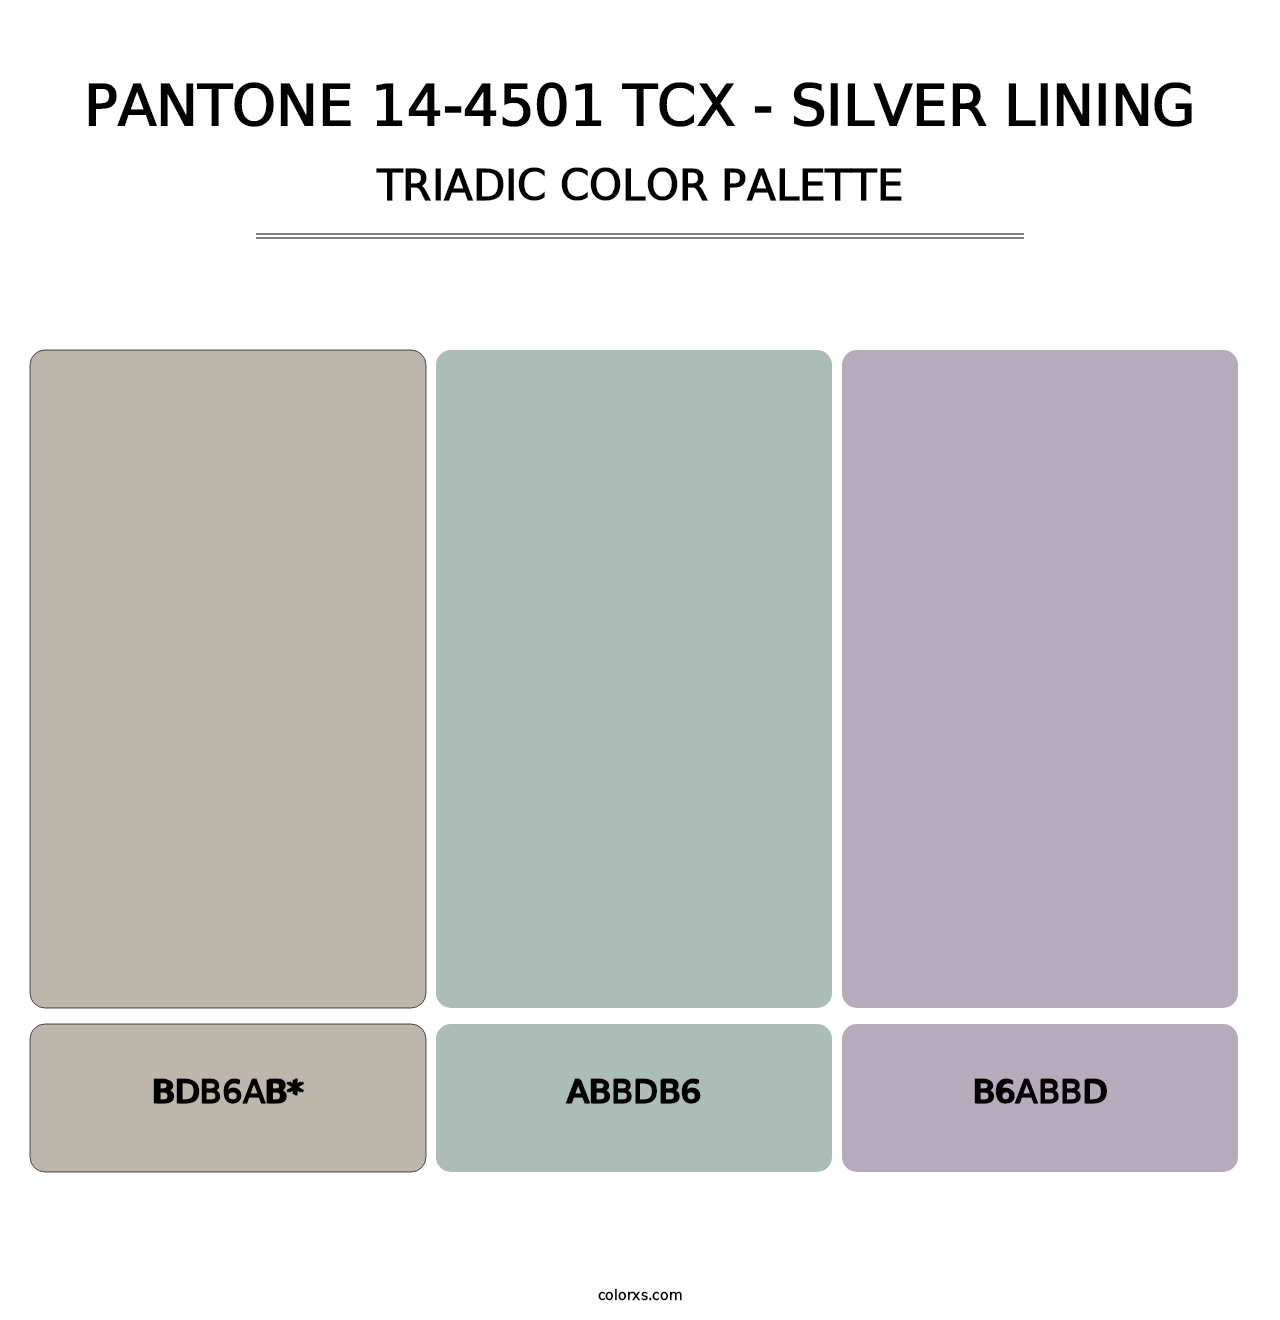 PANTONE 14-4501 TCX - Silver Lining - Triadic Color Palette